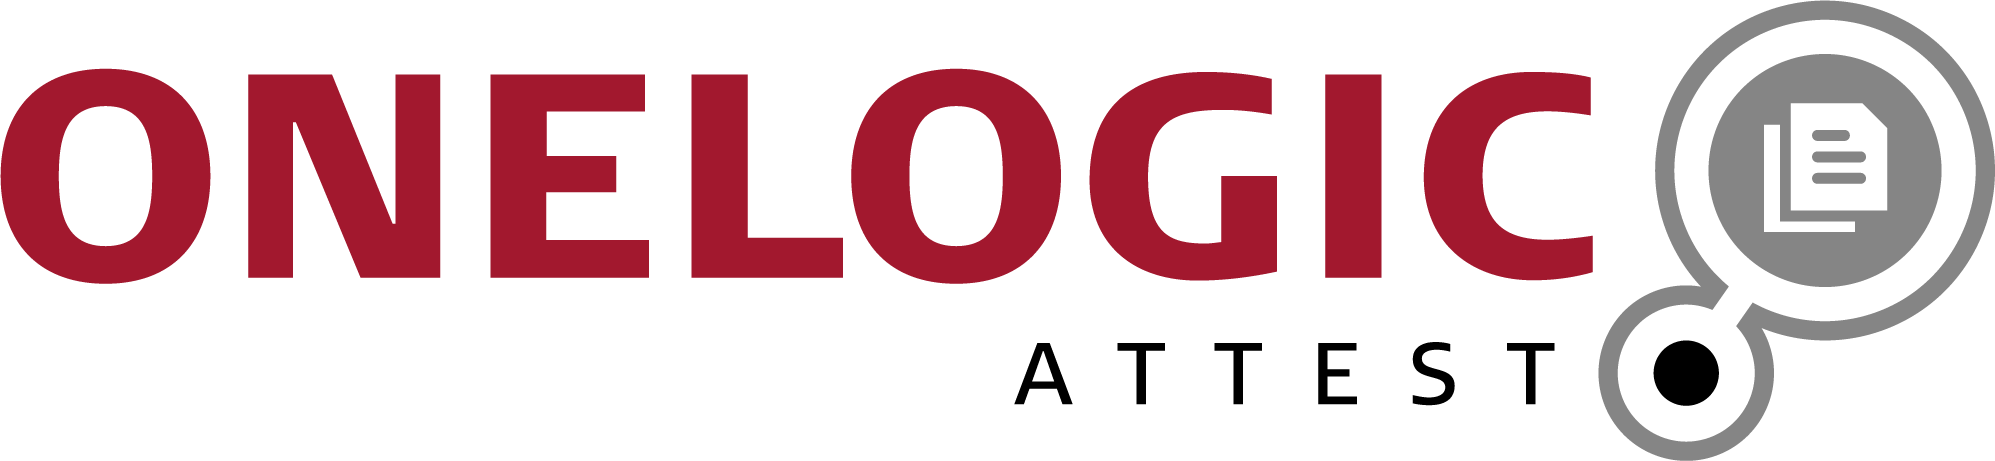 OneLogic Attest logo